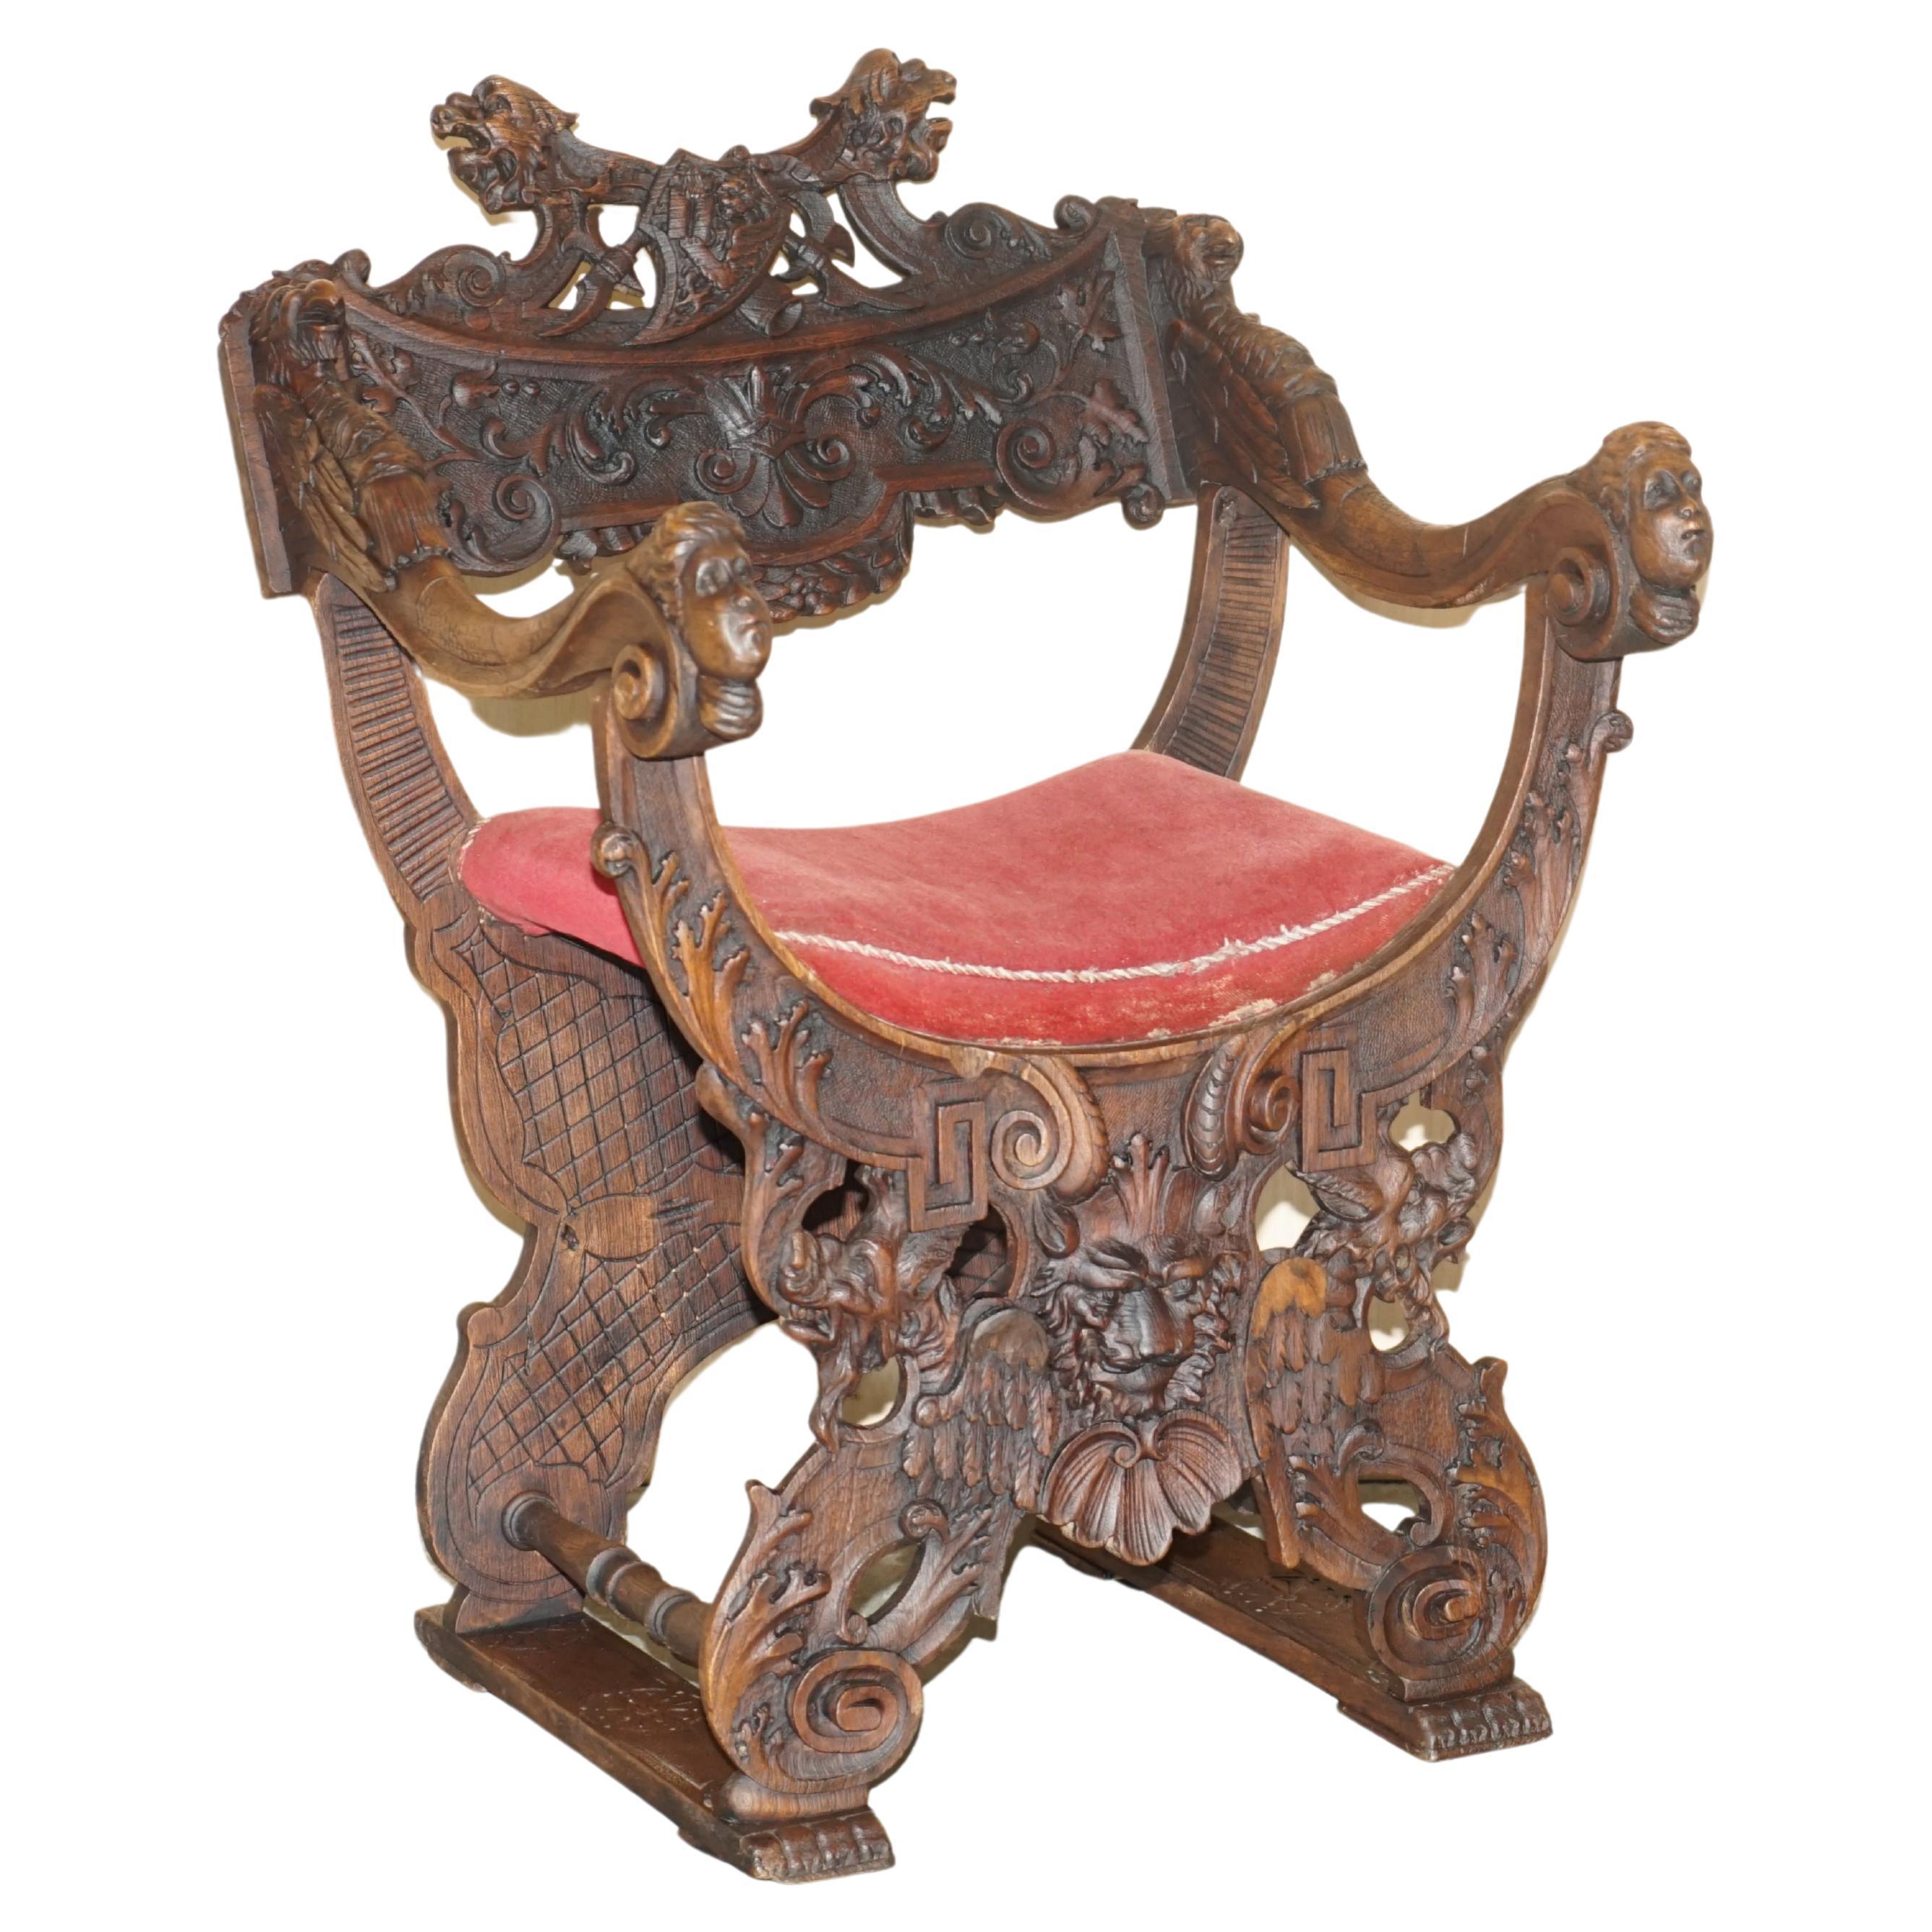 Original 19th Century Heavily Hand Carved Italian Walnut Throne Armchair For Sale